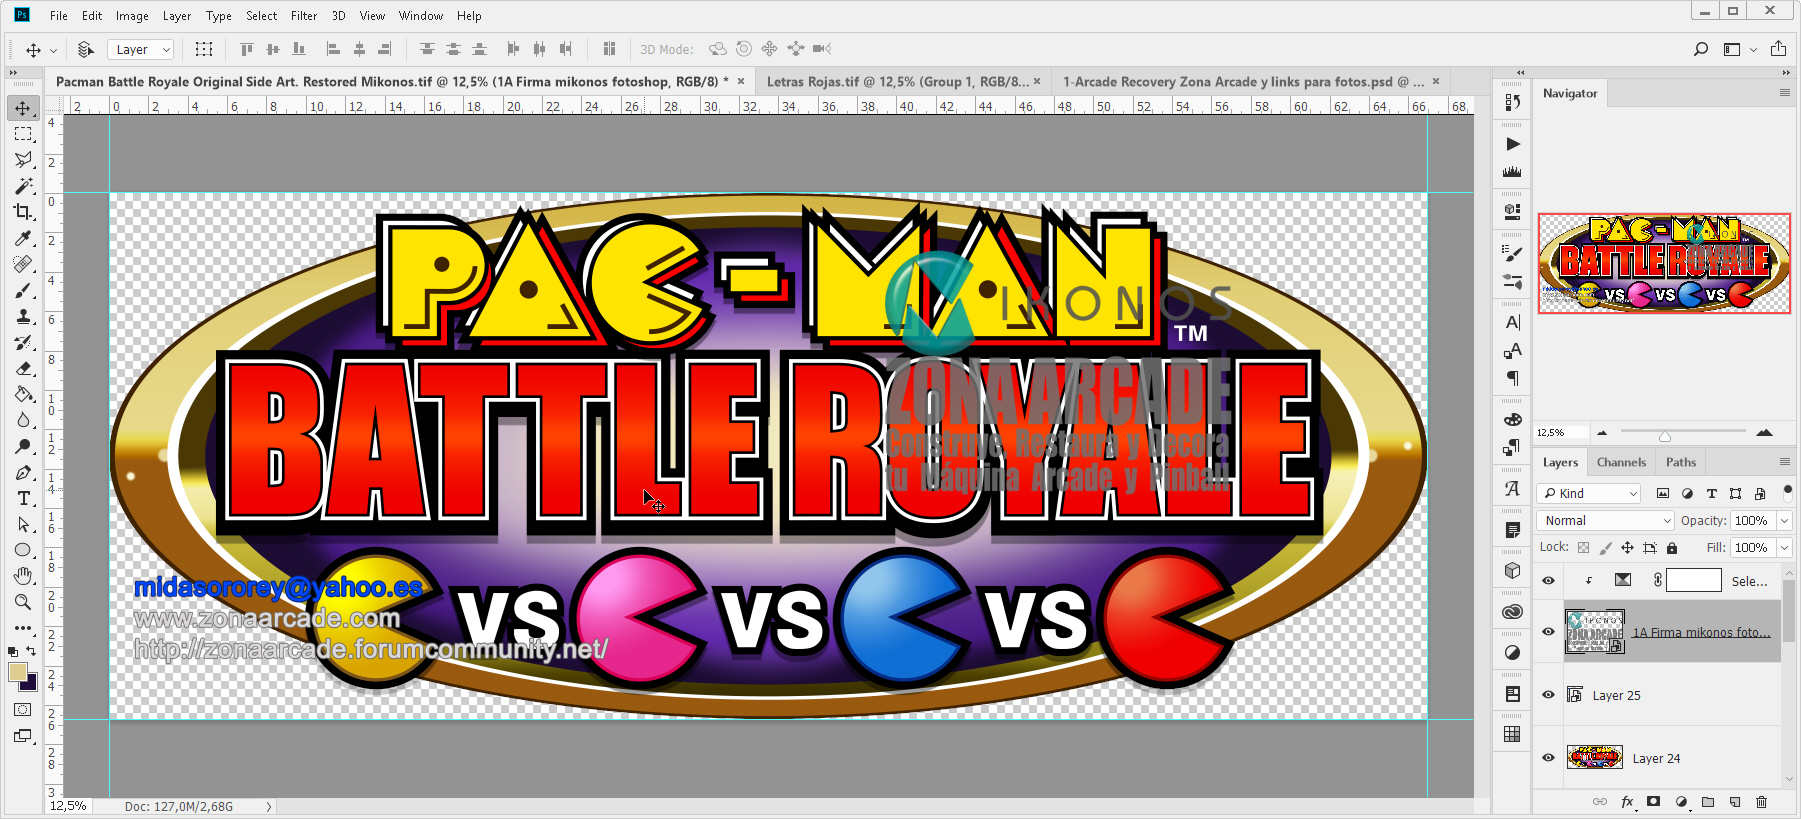 Pacman-Battle-Royale-Side-Art-Restored-Mikonos1